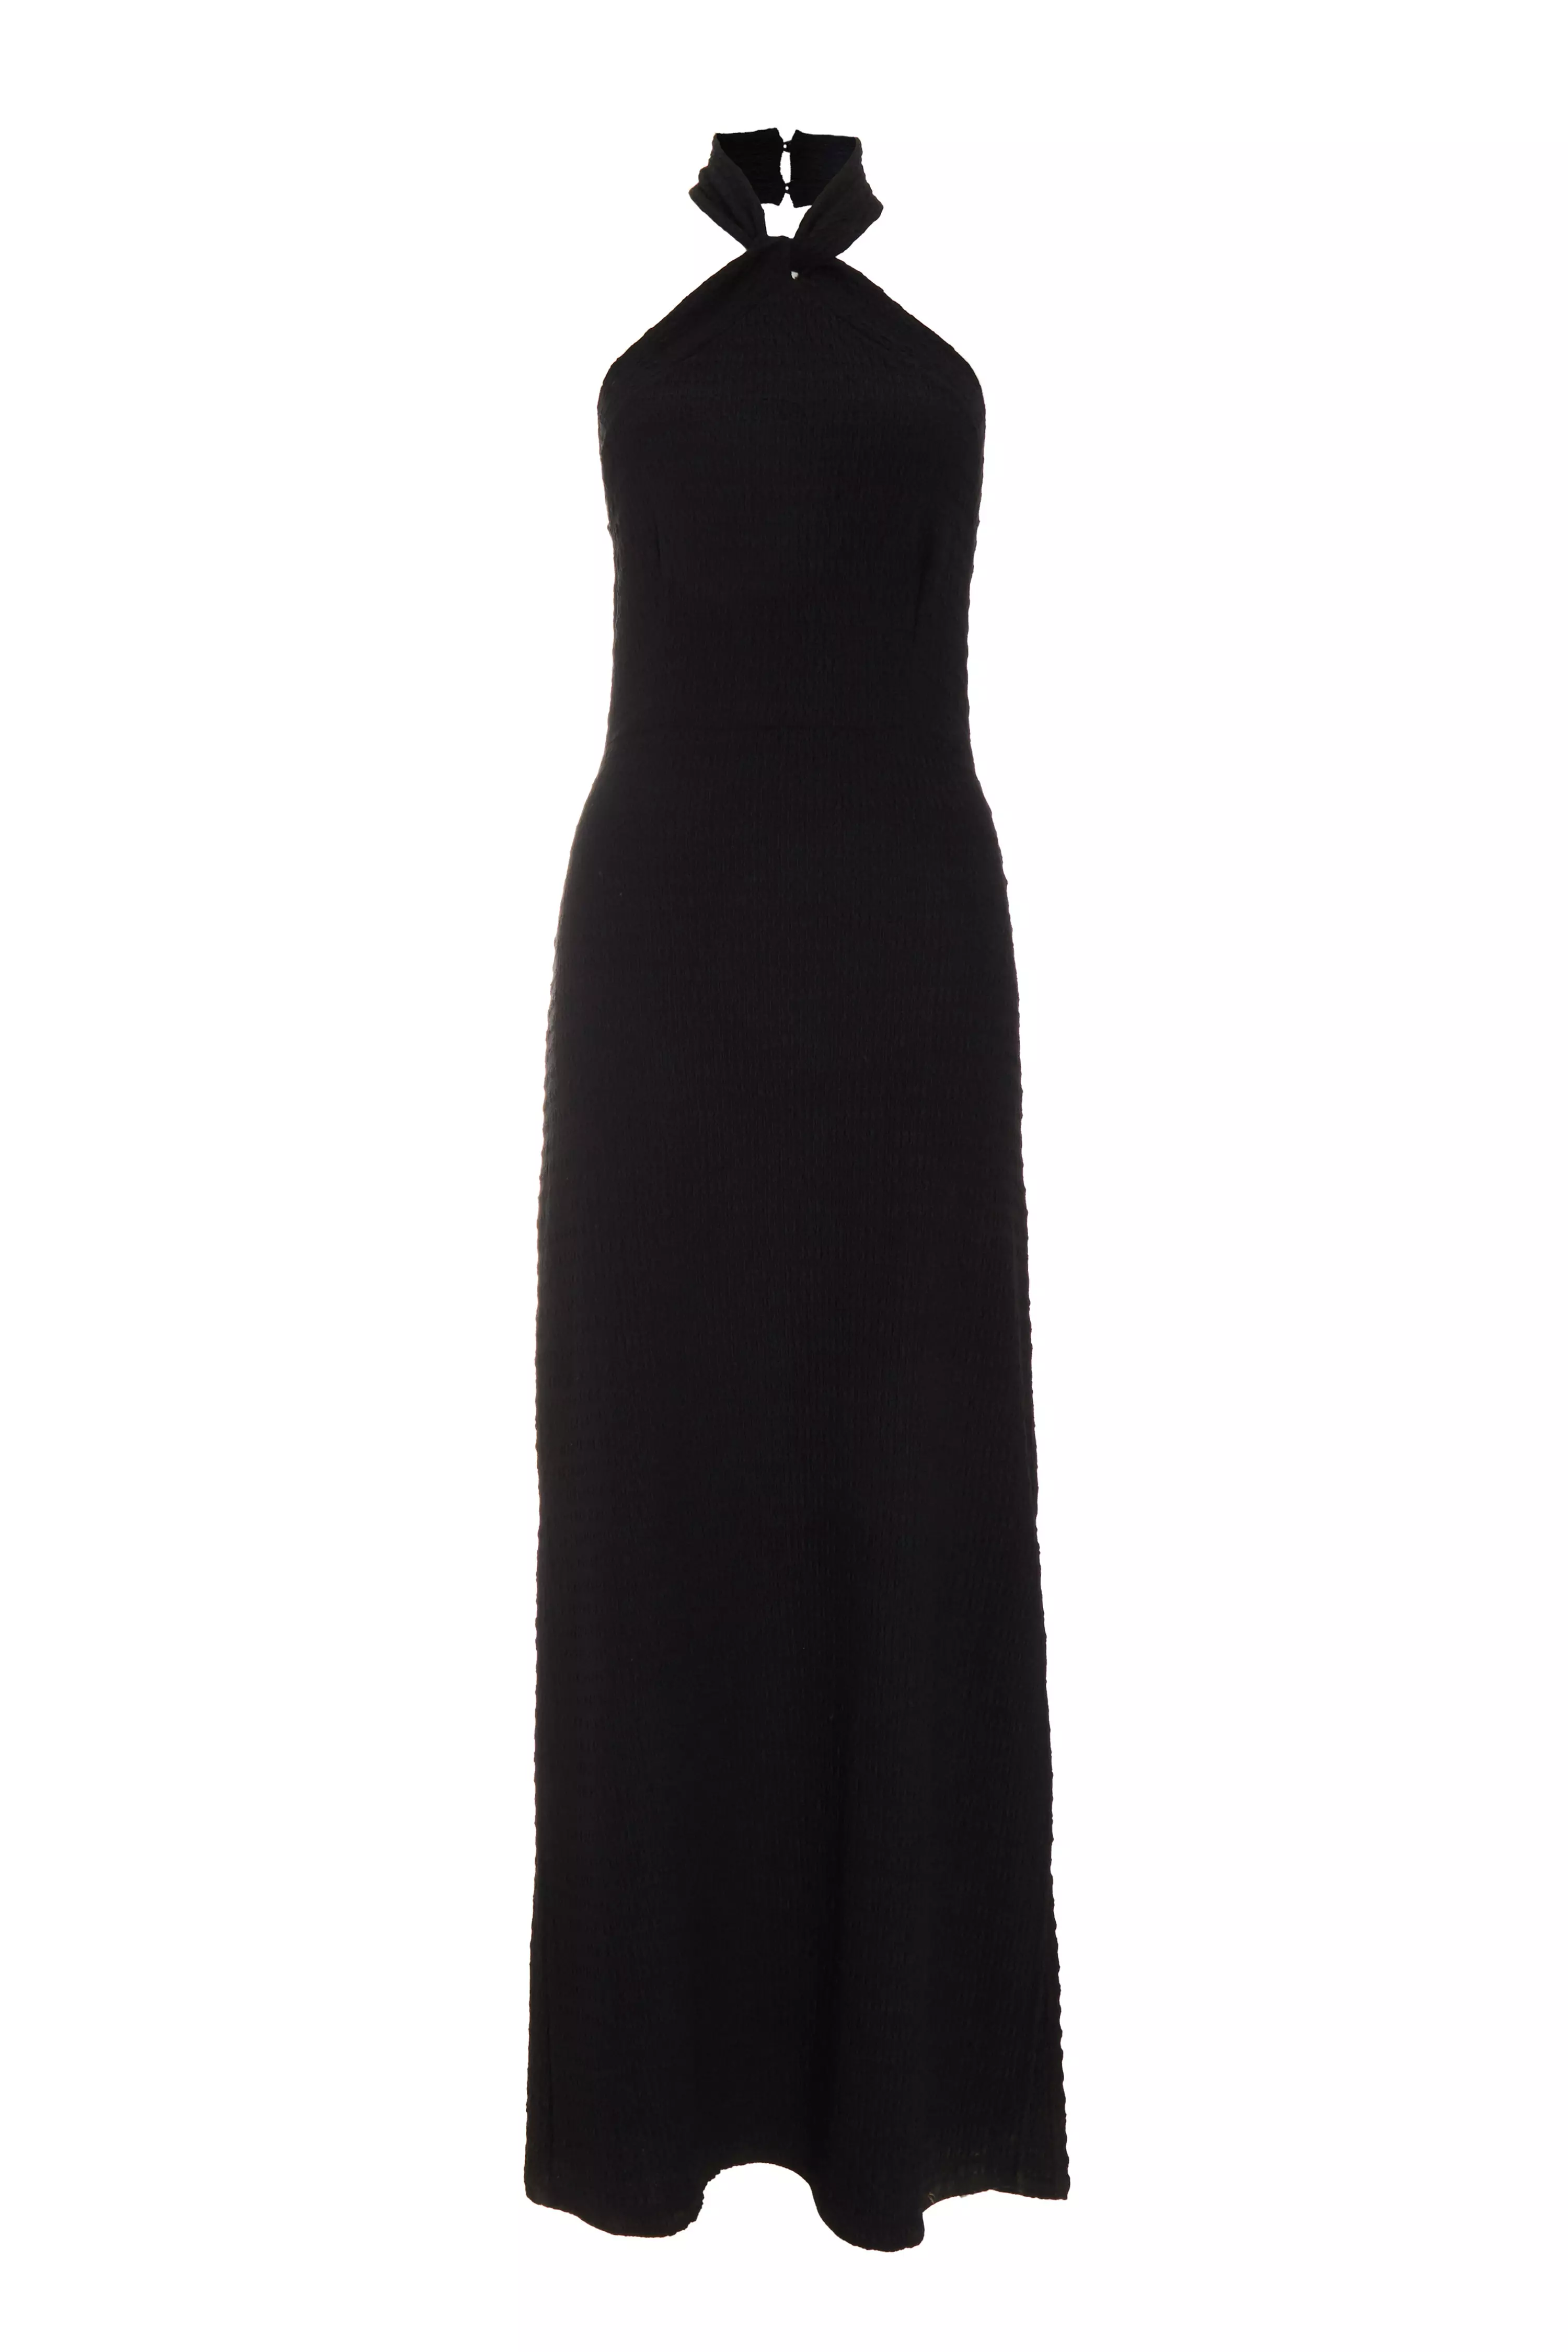 Petite Black Halterneck Textured Maxi Dress